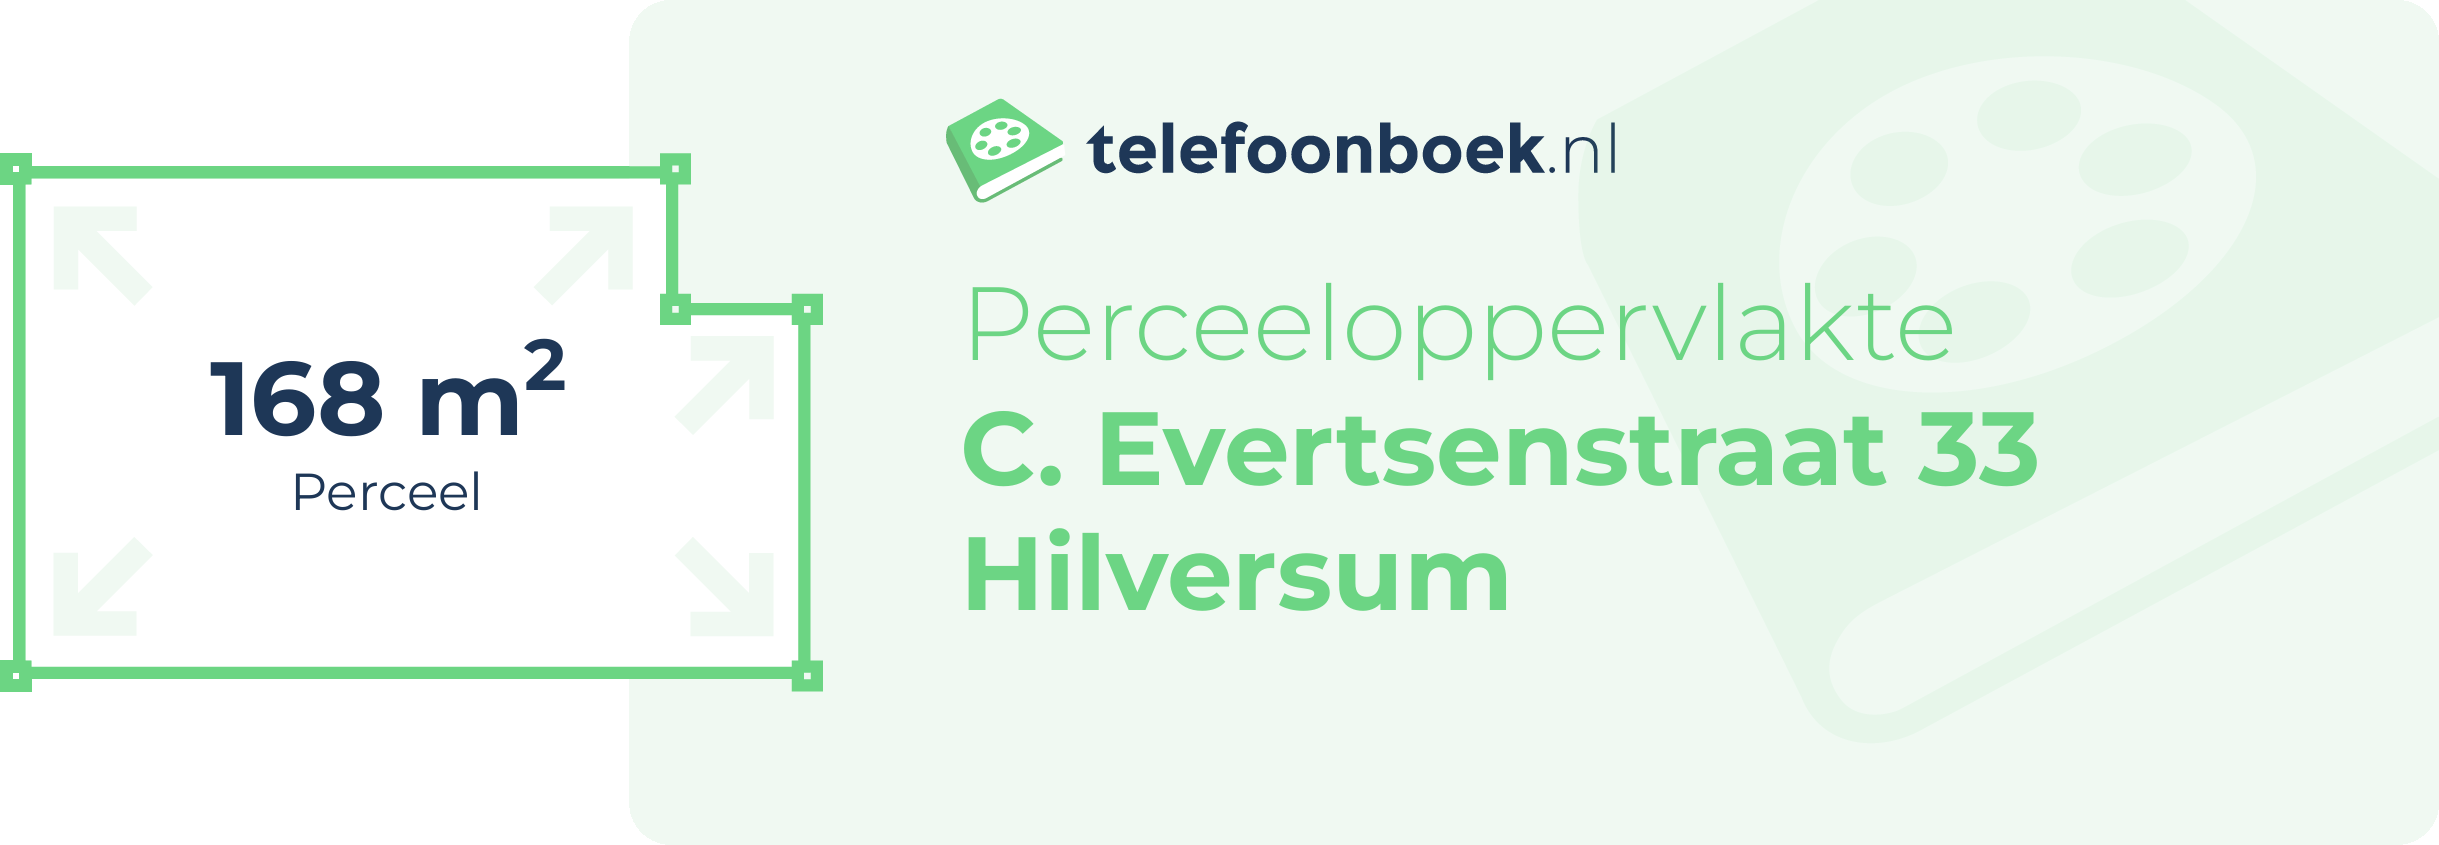 Perceeloppervlakte C. Evertsenstraat 33 Hilversum